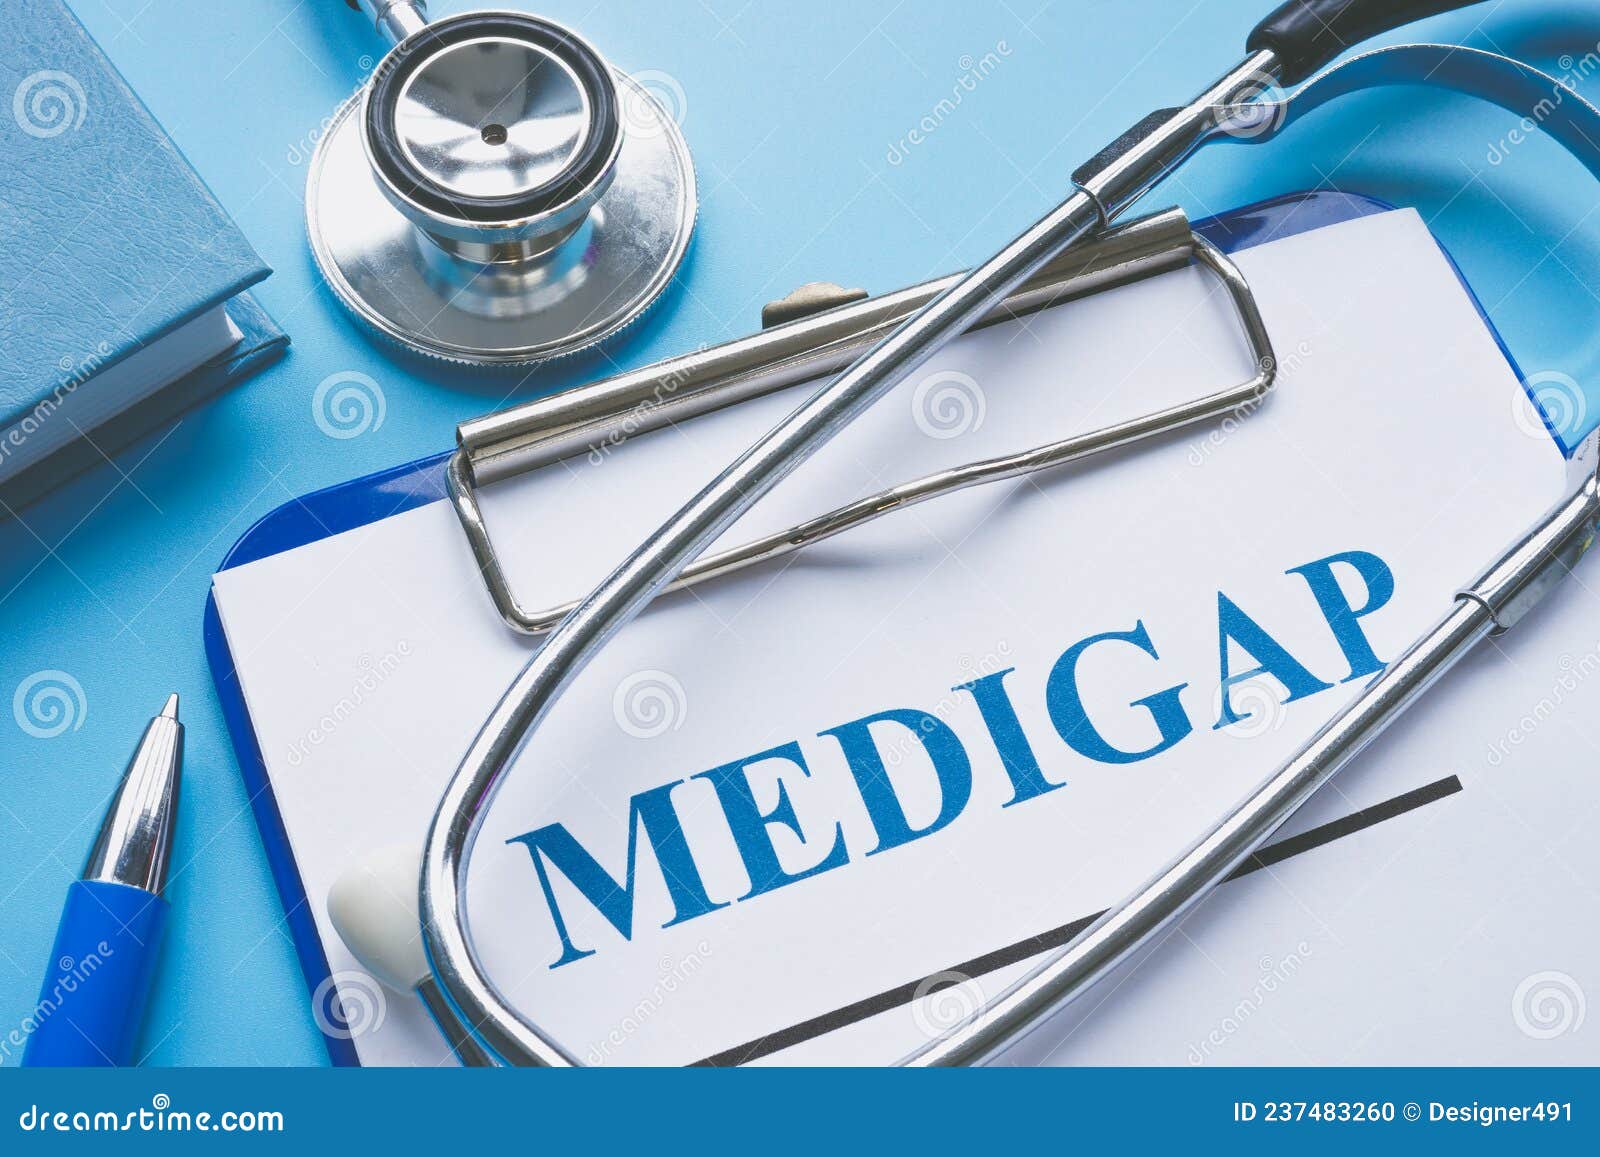 medicare supplement insurance medigap application and stethoscope.